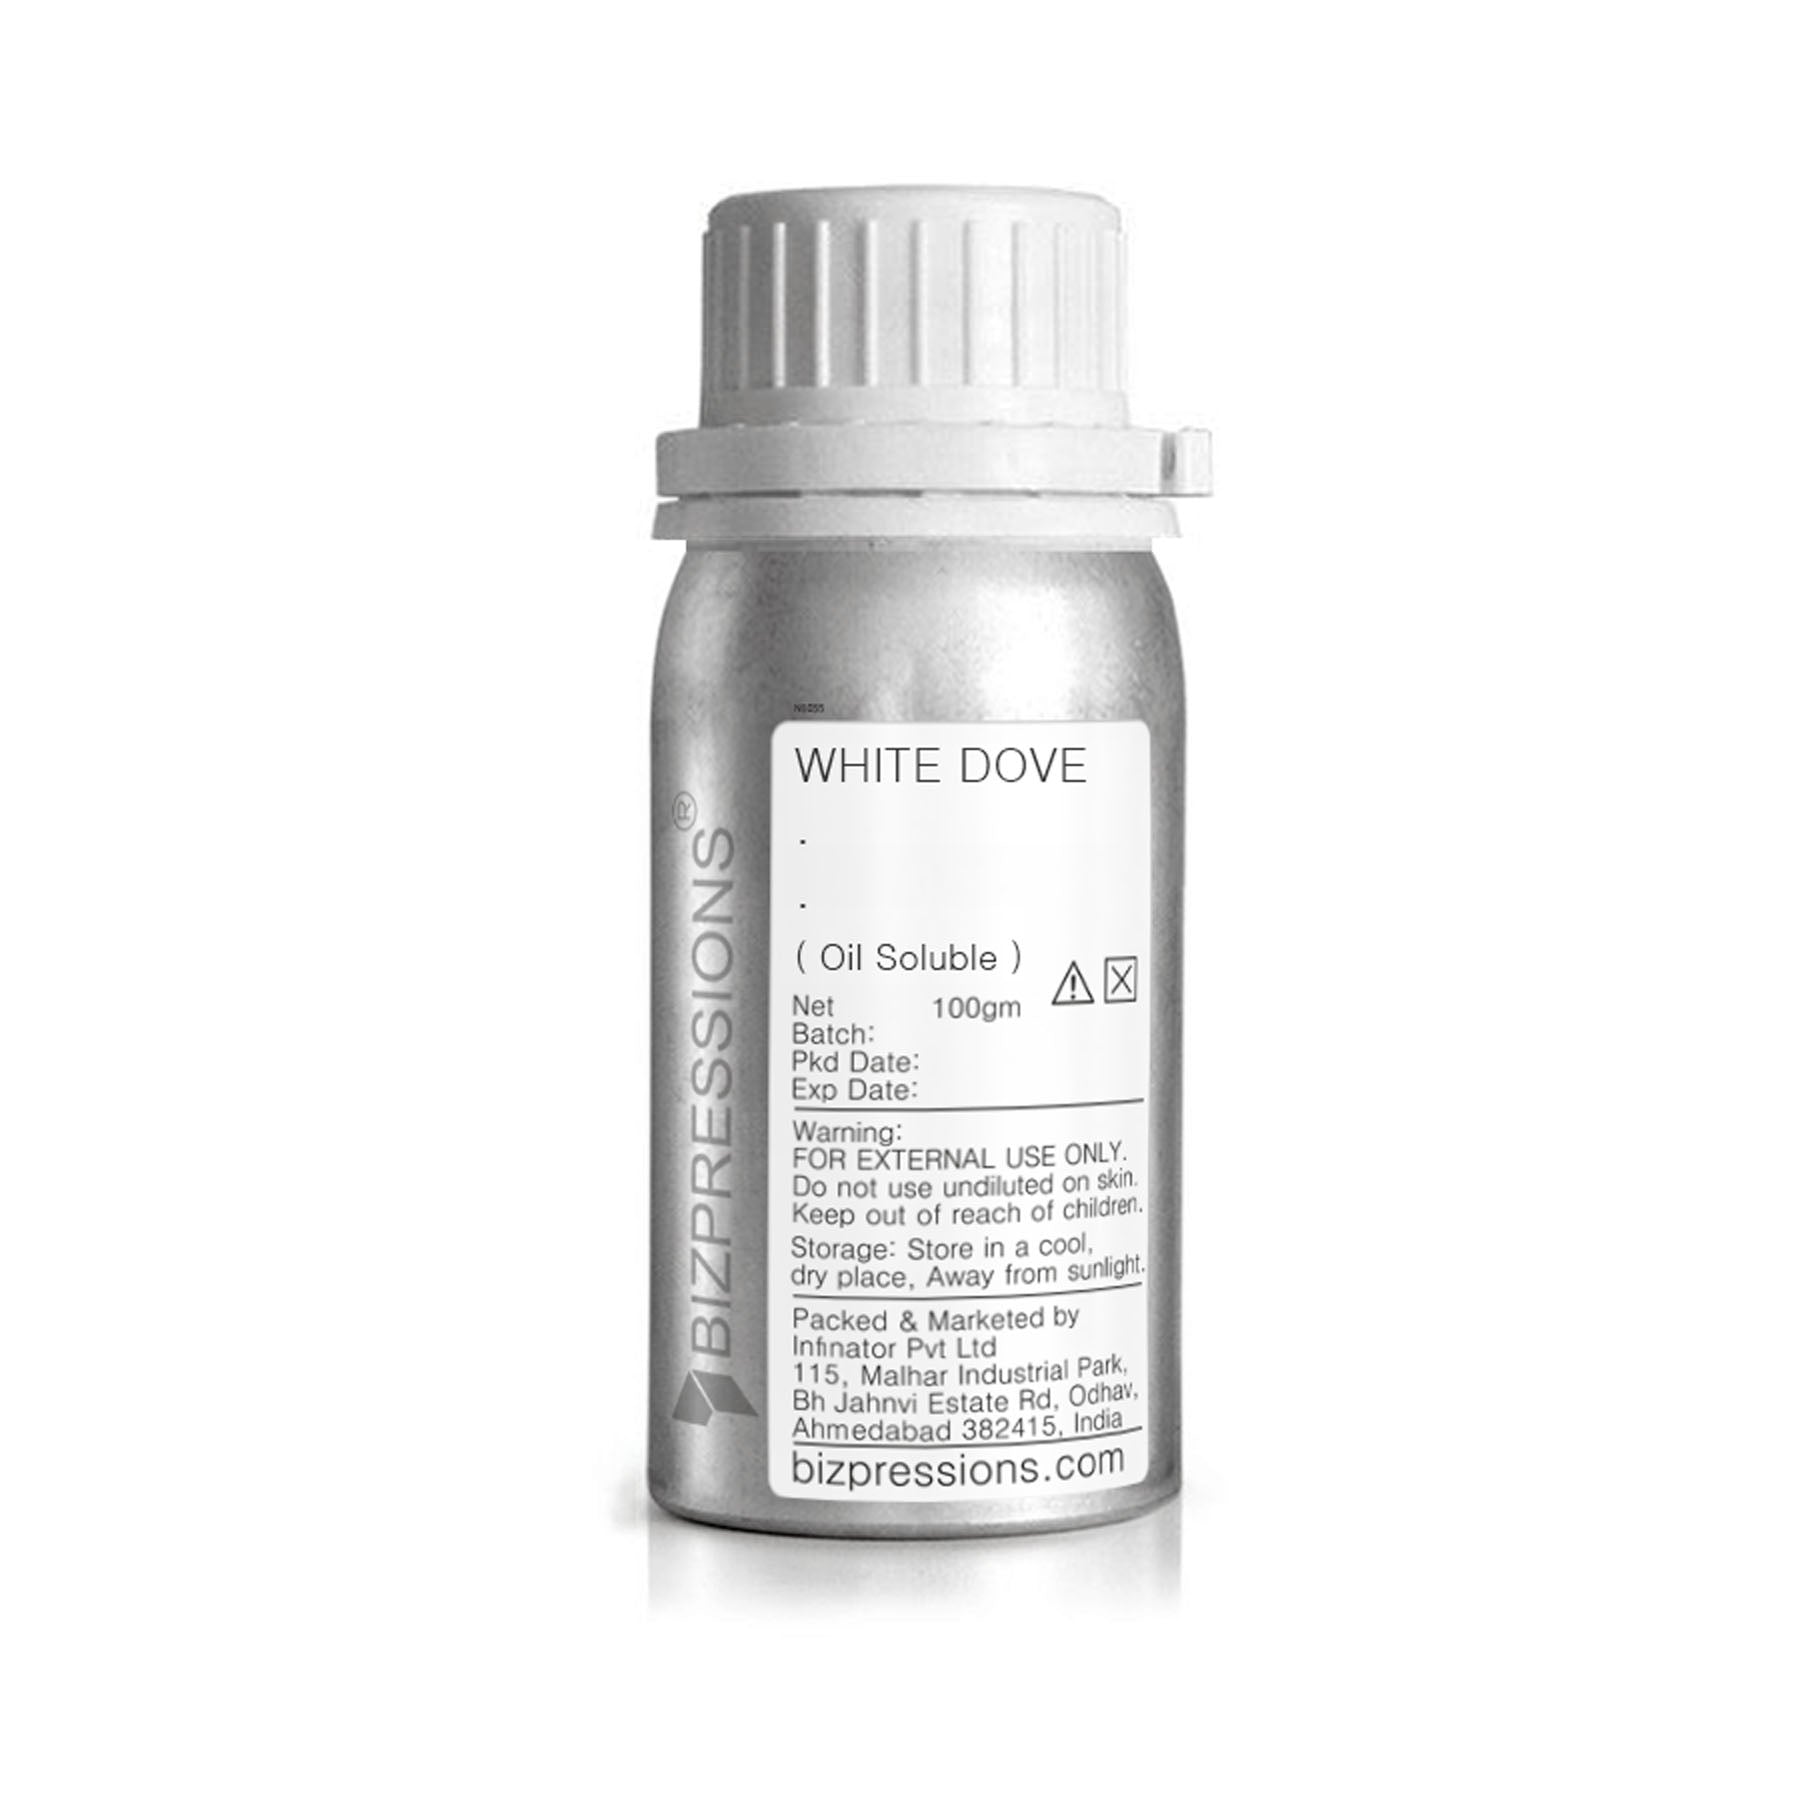 WHITE DOVE - Fragrance ( Oil Soluble ) - 100 gm